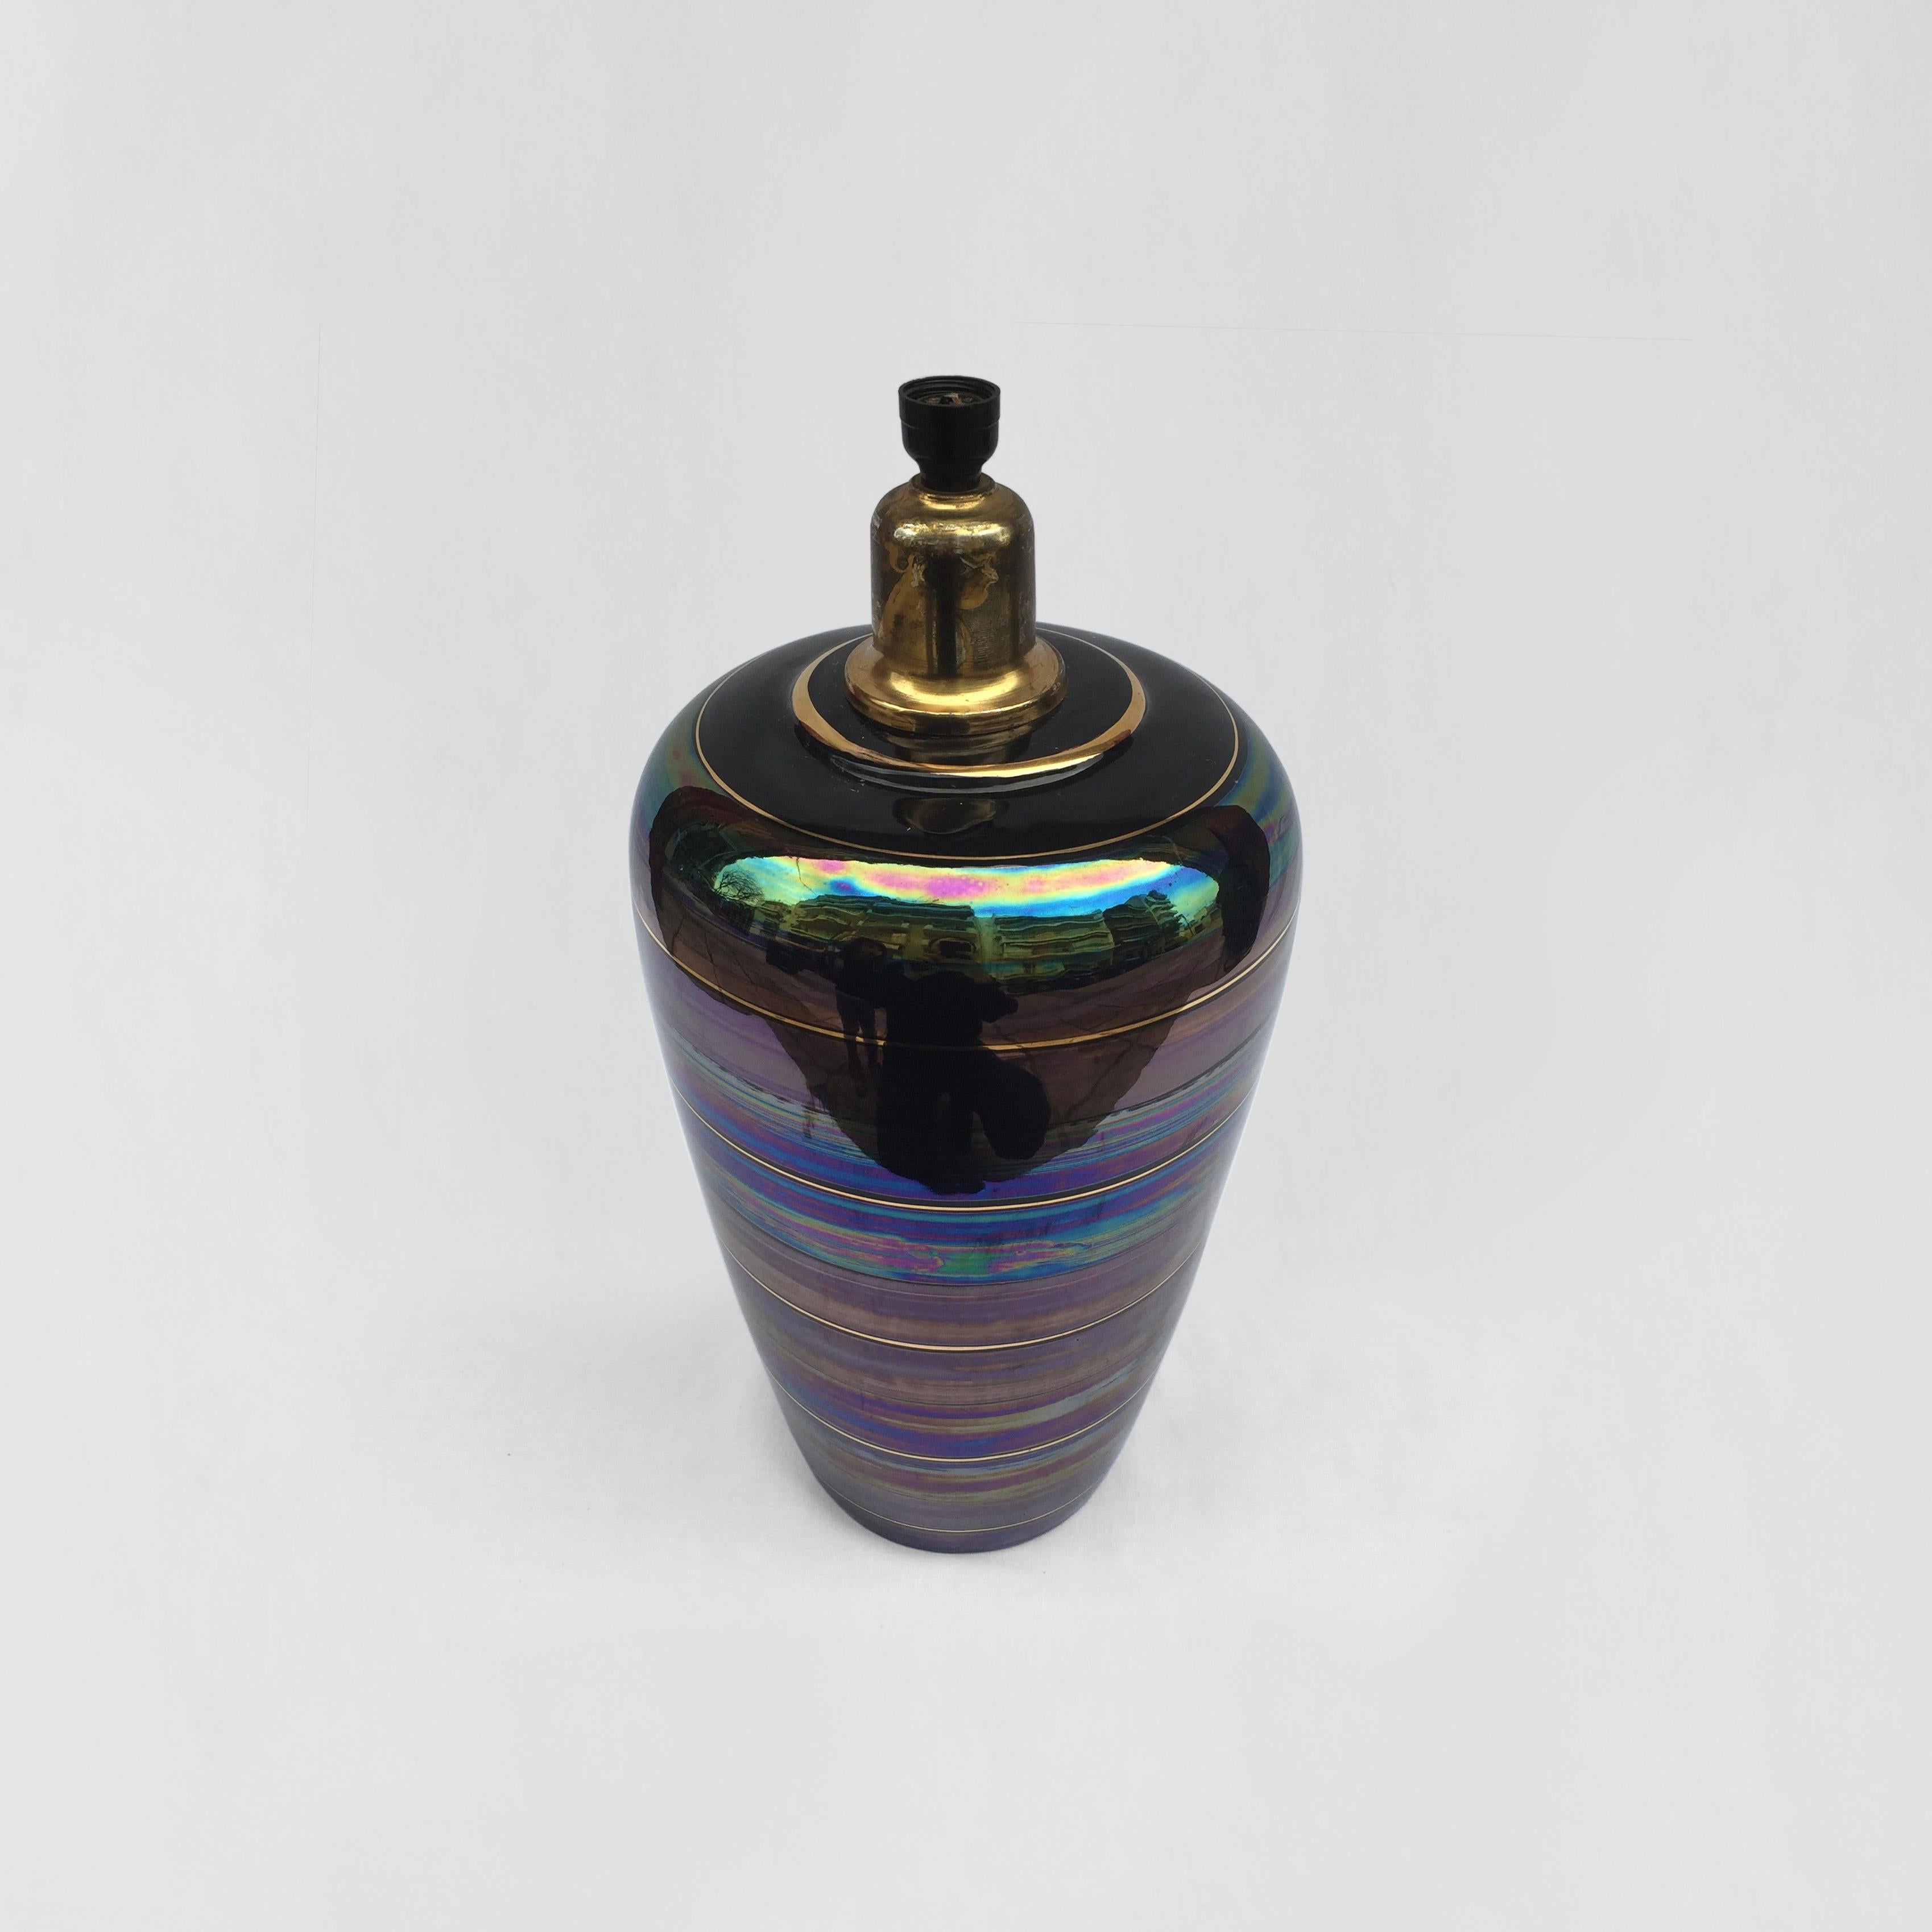 Glazed Iridescent Ceramic Table Lamp 1970s Art Nouveau Style Manner of Johann Loetz For Sale